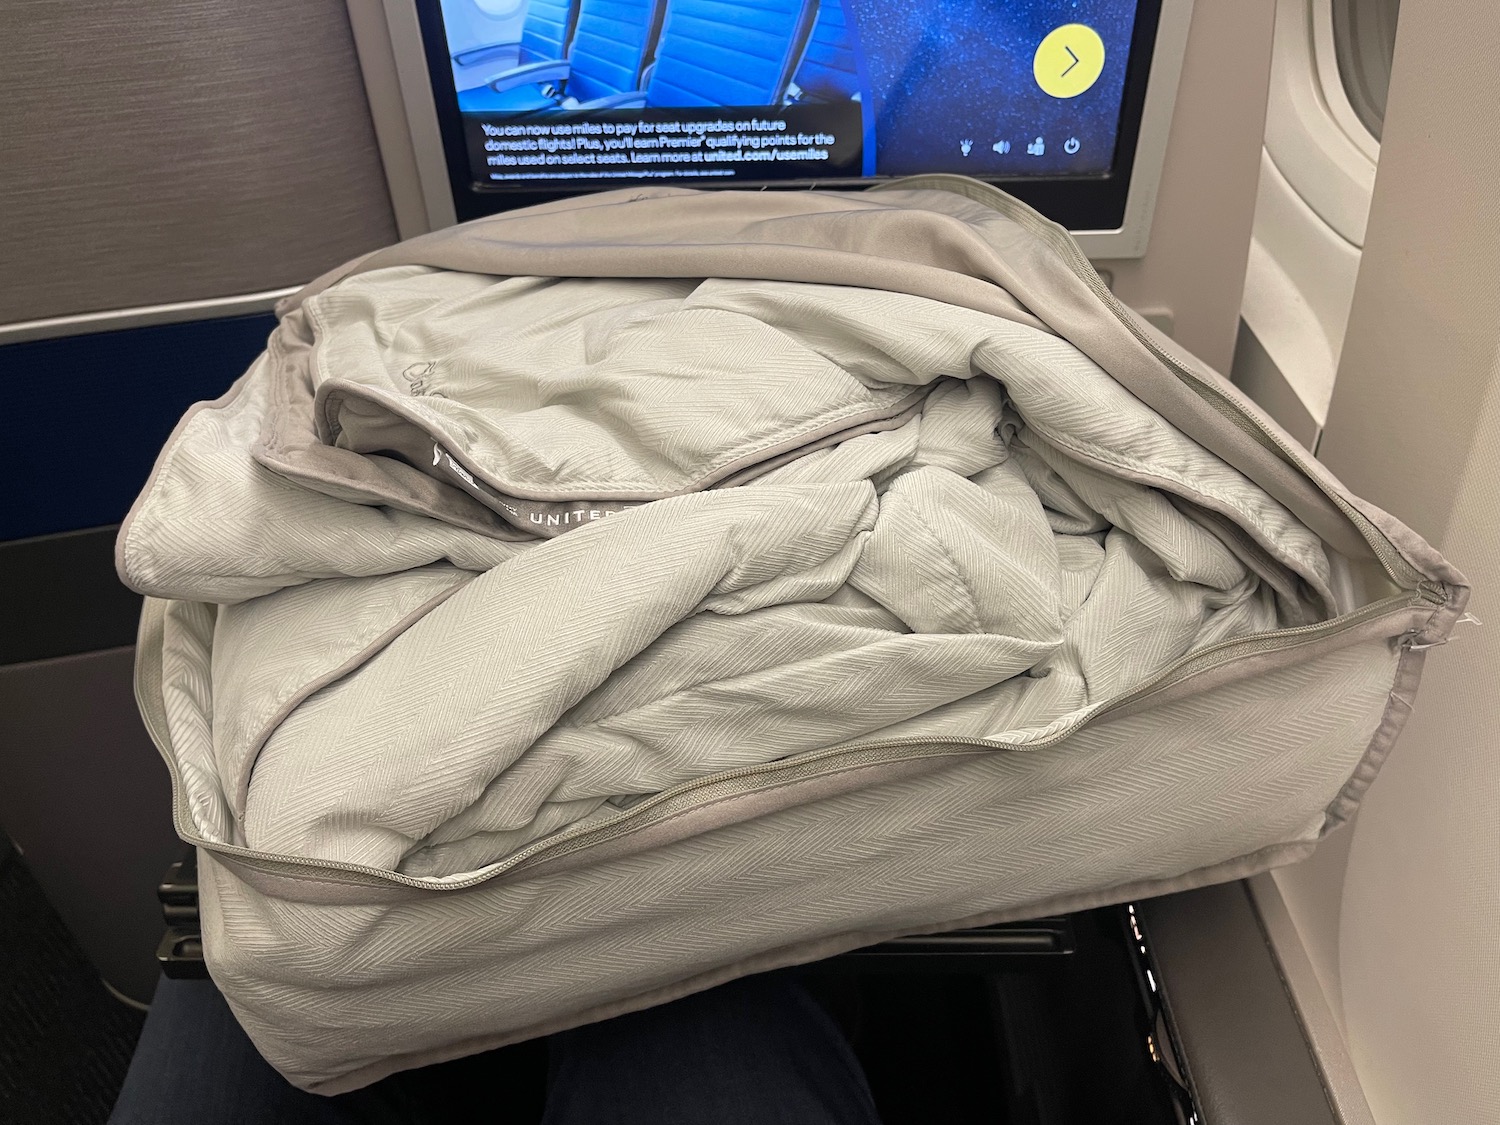 a blanket on a plane